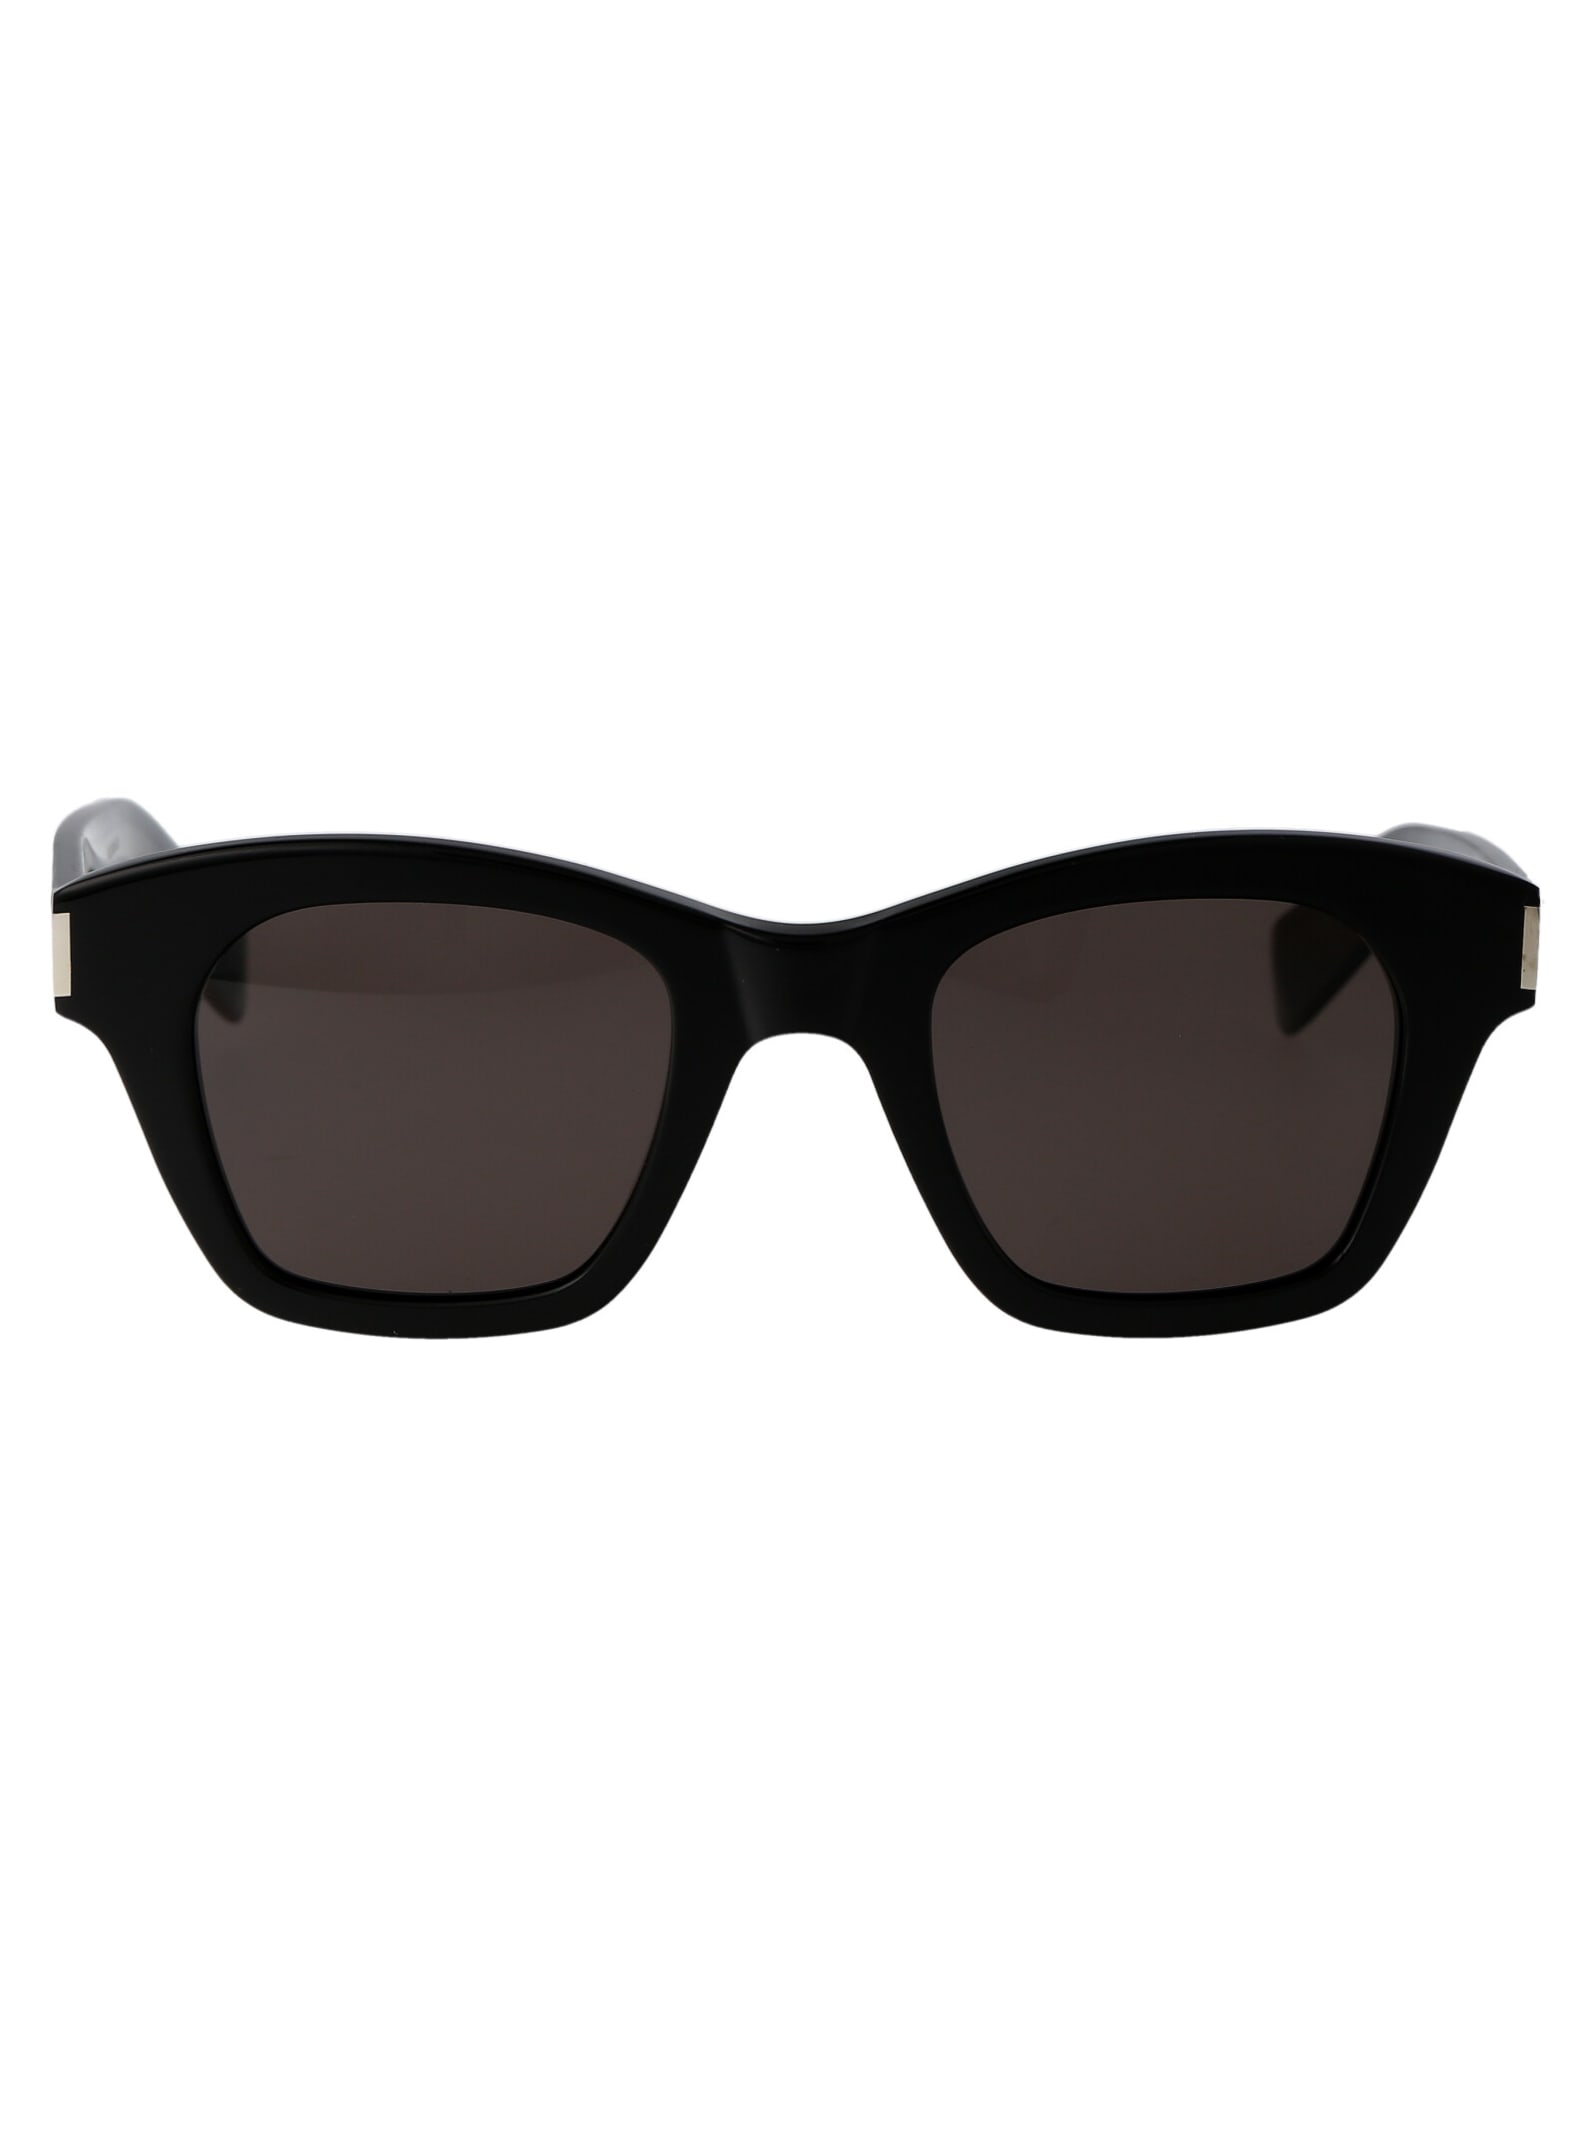 Saint Laurent Sl 592 Sunglasses In 001 Black Black Black